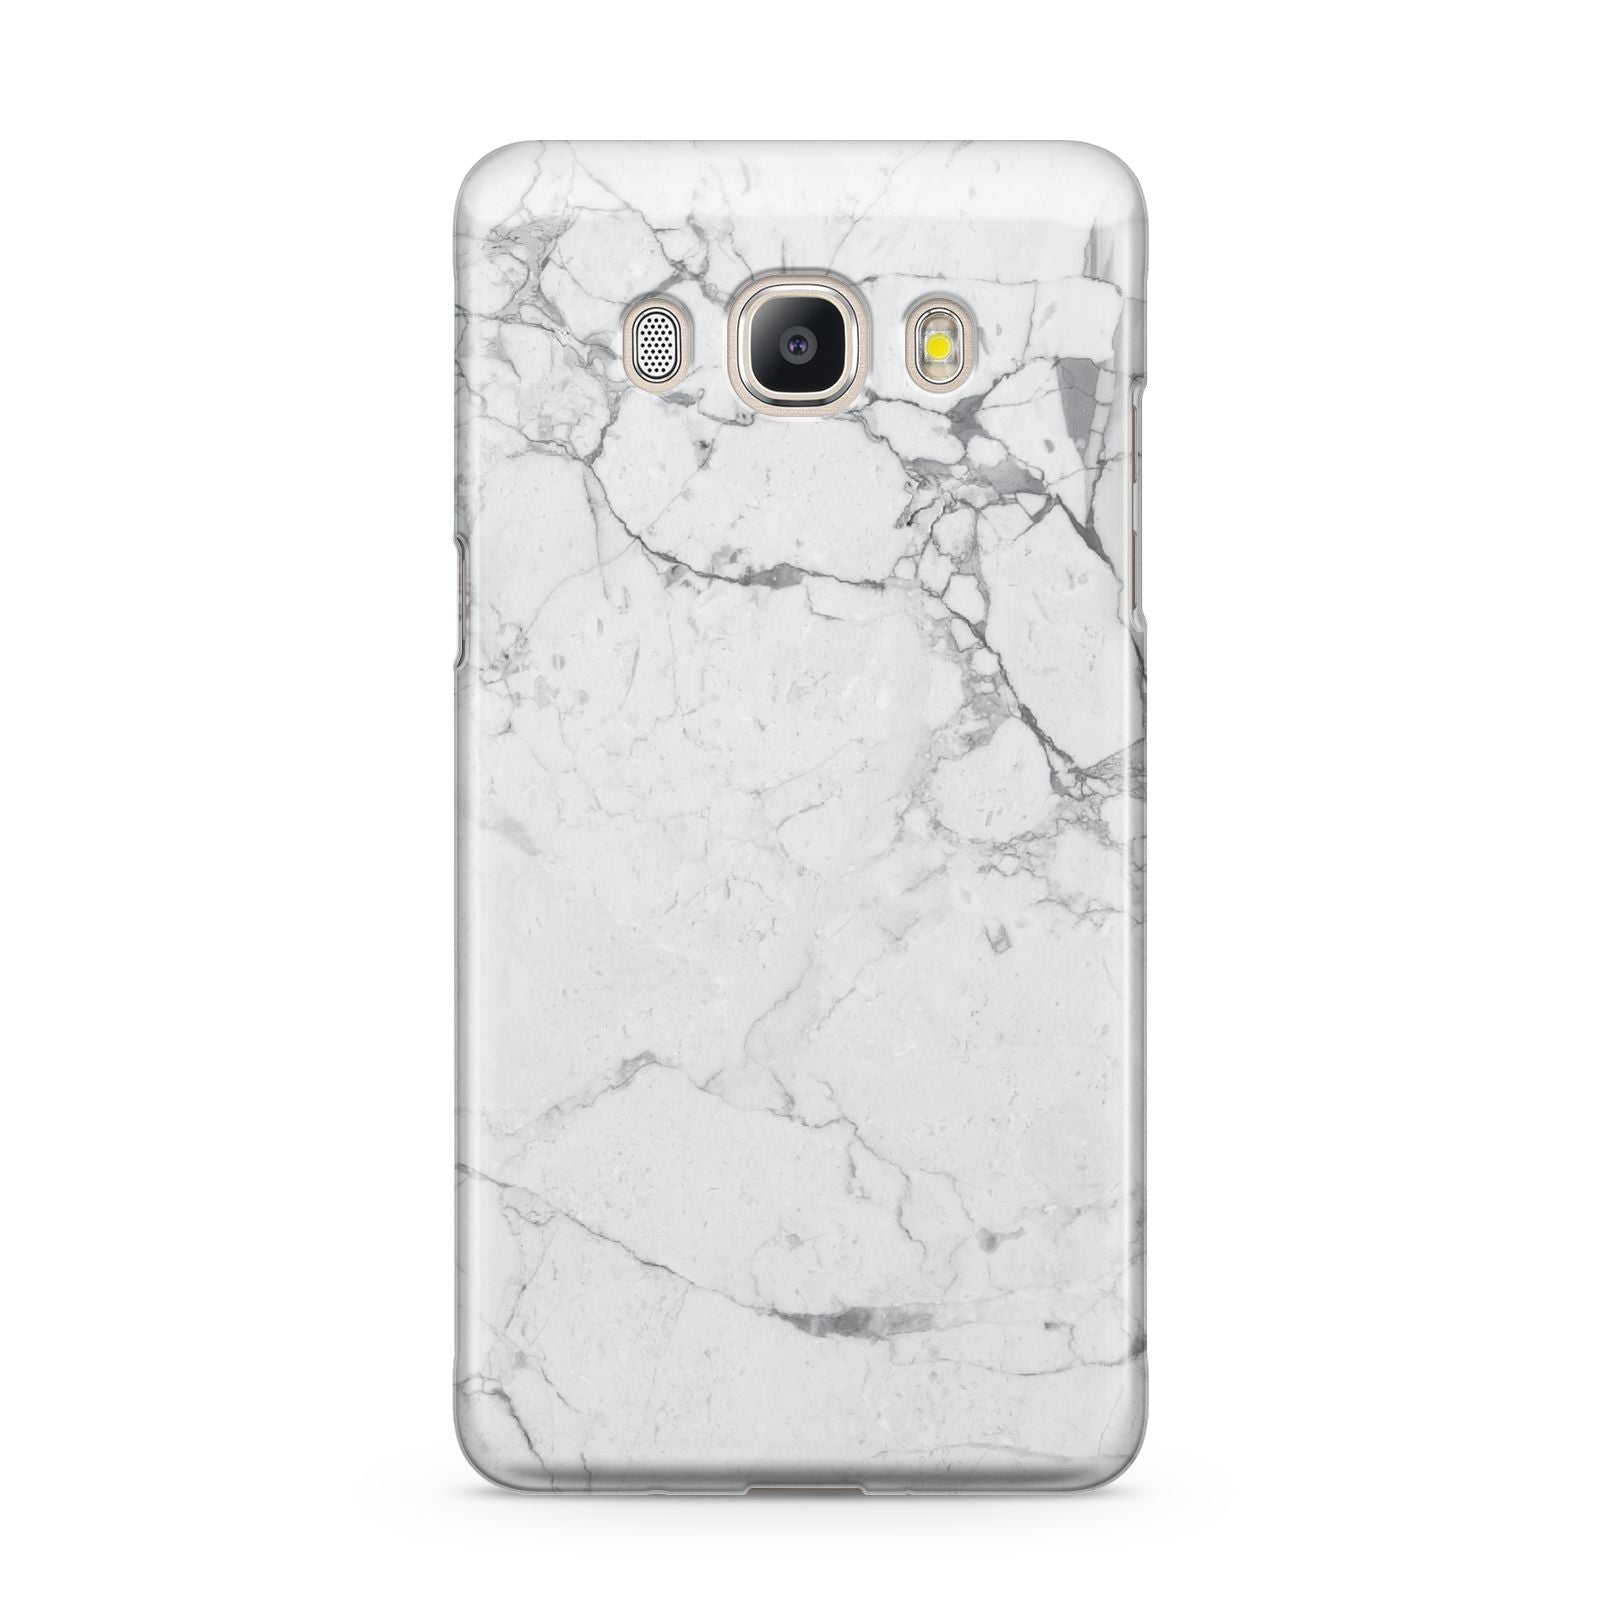 Faux Marble Effect Grey White Samsung Galaxy J5 2016 Case